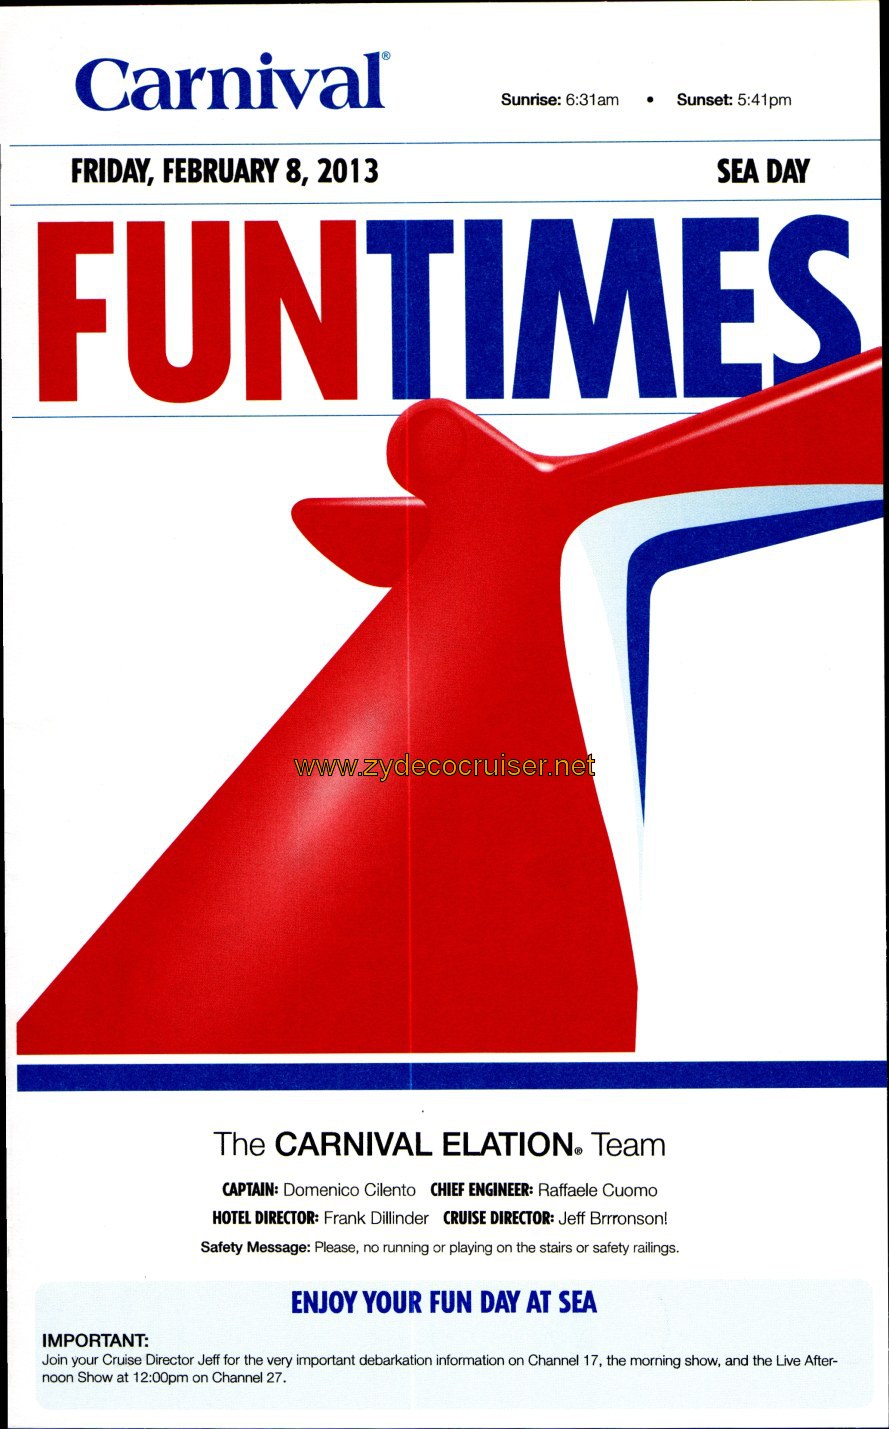 025: Carnival Elation 5 Day Fun Times, Feb 8, 2013, Page 1, 